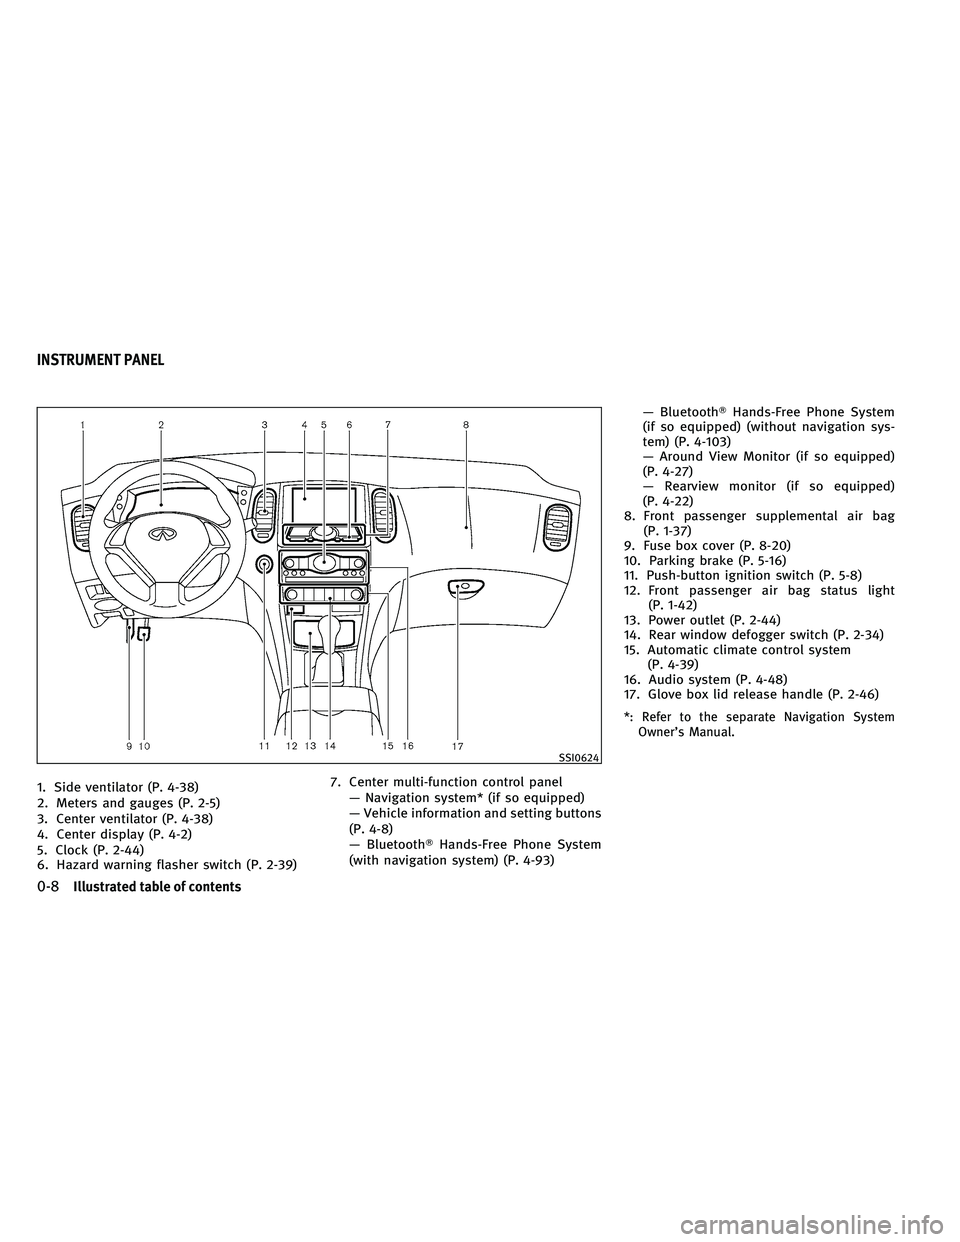 INFINITI EX 2011 User Guide 1. Side ventilator (P. 4-38)
2. Meters and gauges (P. 2-5)
3. Center ventilator (P. 4-38)
4. Center display (P. 4-2)
5. Clock (P. 2-44)
6. Hazard warning flasher switch (P. 2-39)7. Center multi-functi